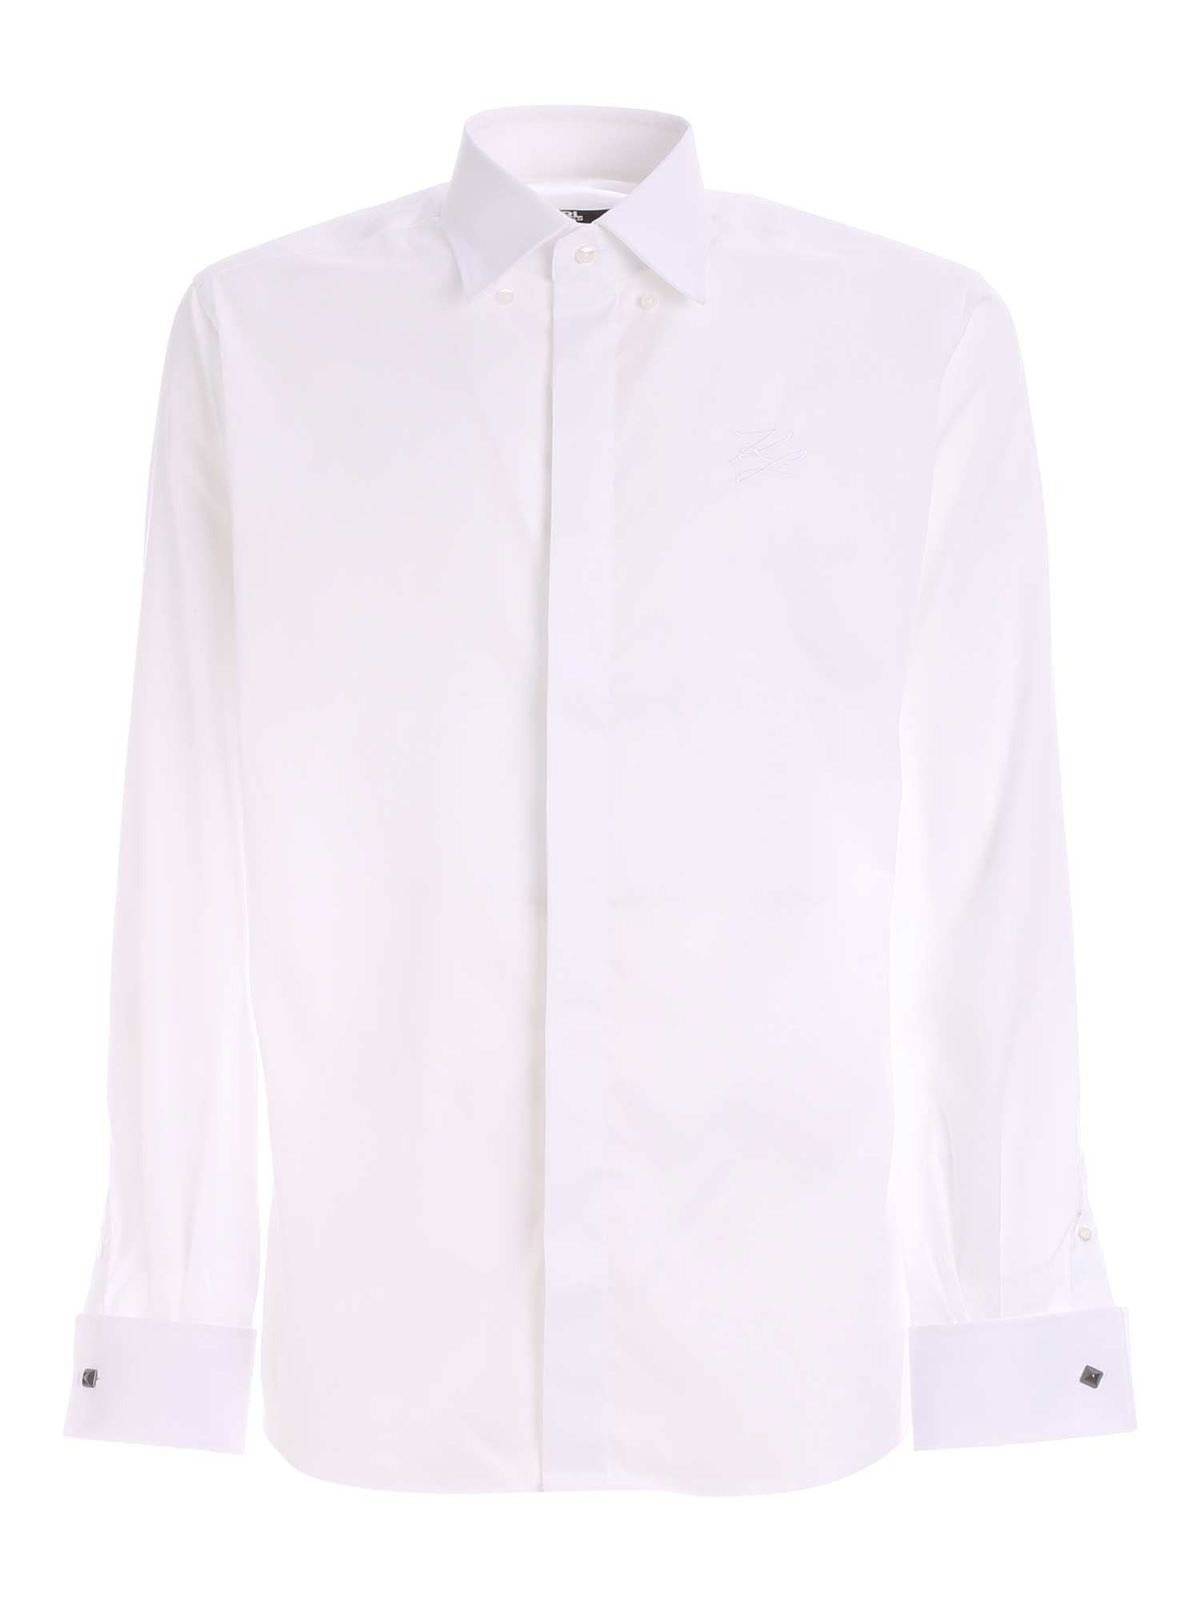 Karl Lagerfeld Signature Logo Shirt In White